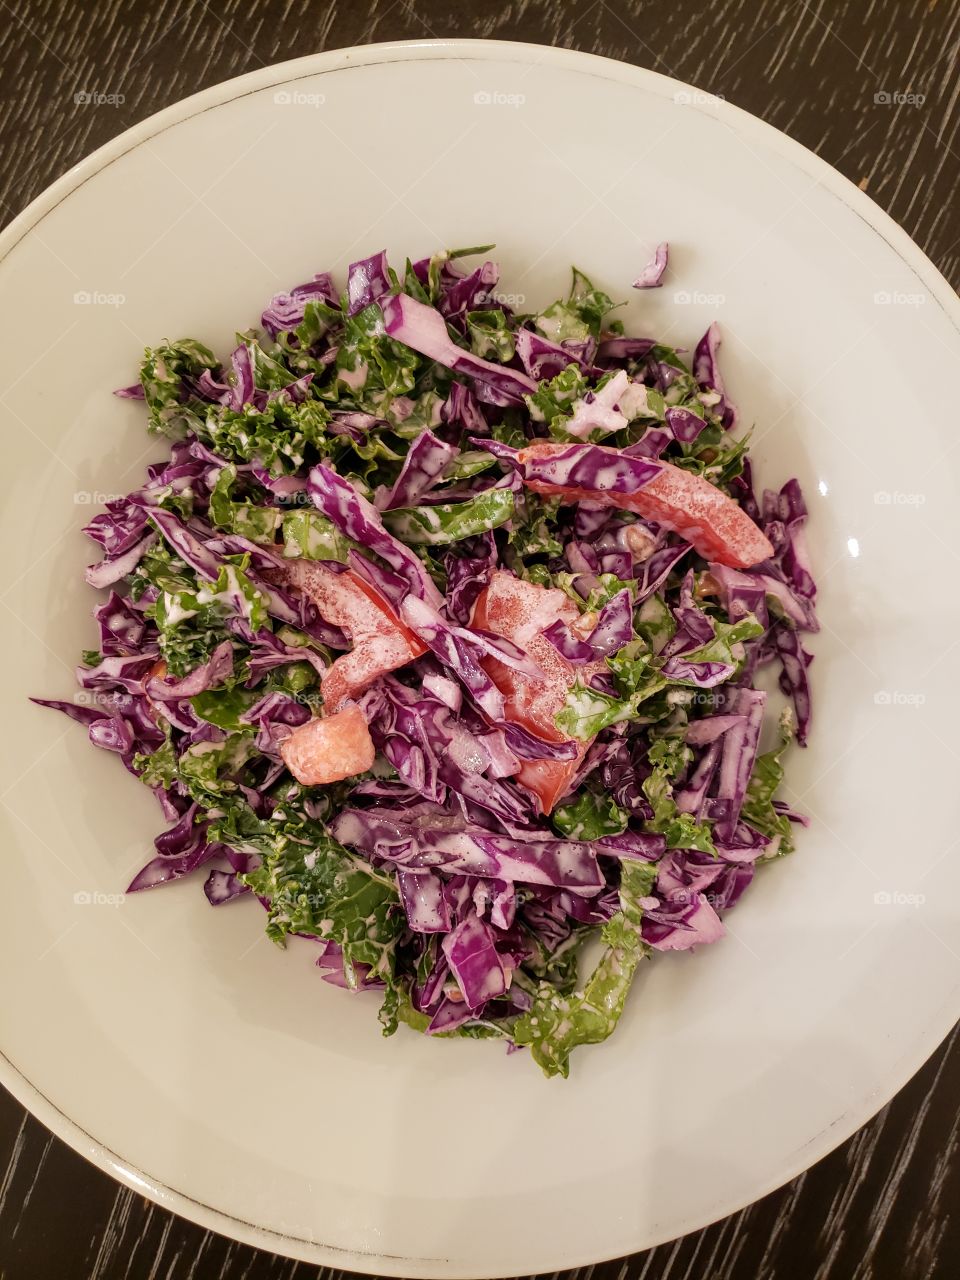 Cabbage kale salad